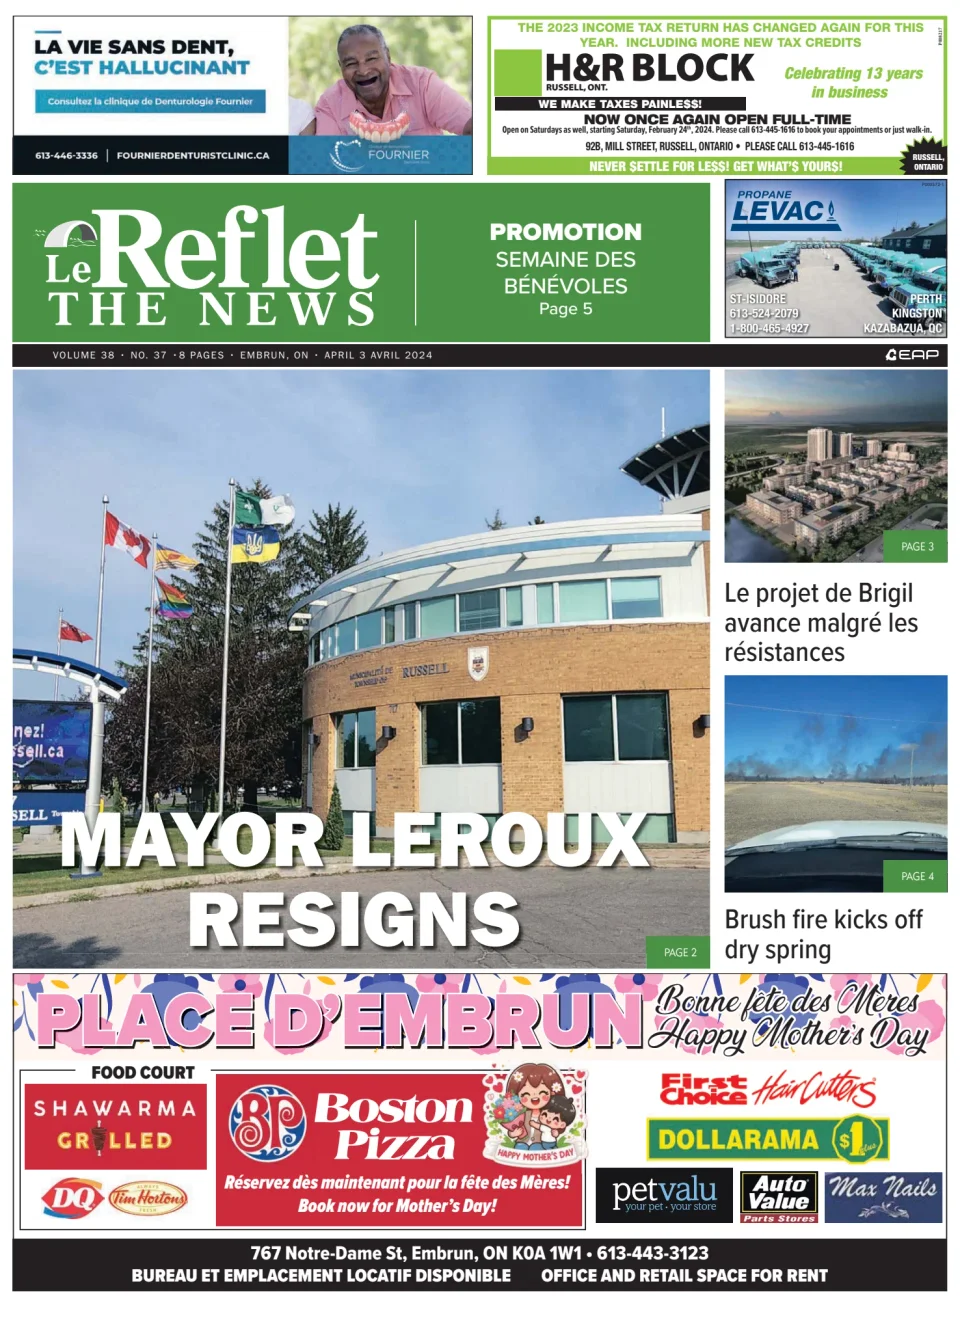 Le Reflet (The News)